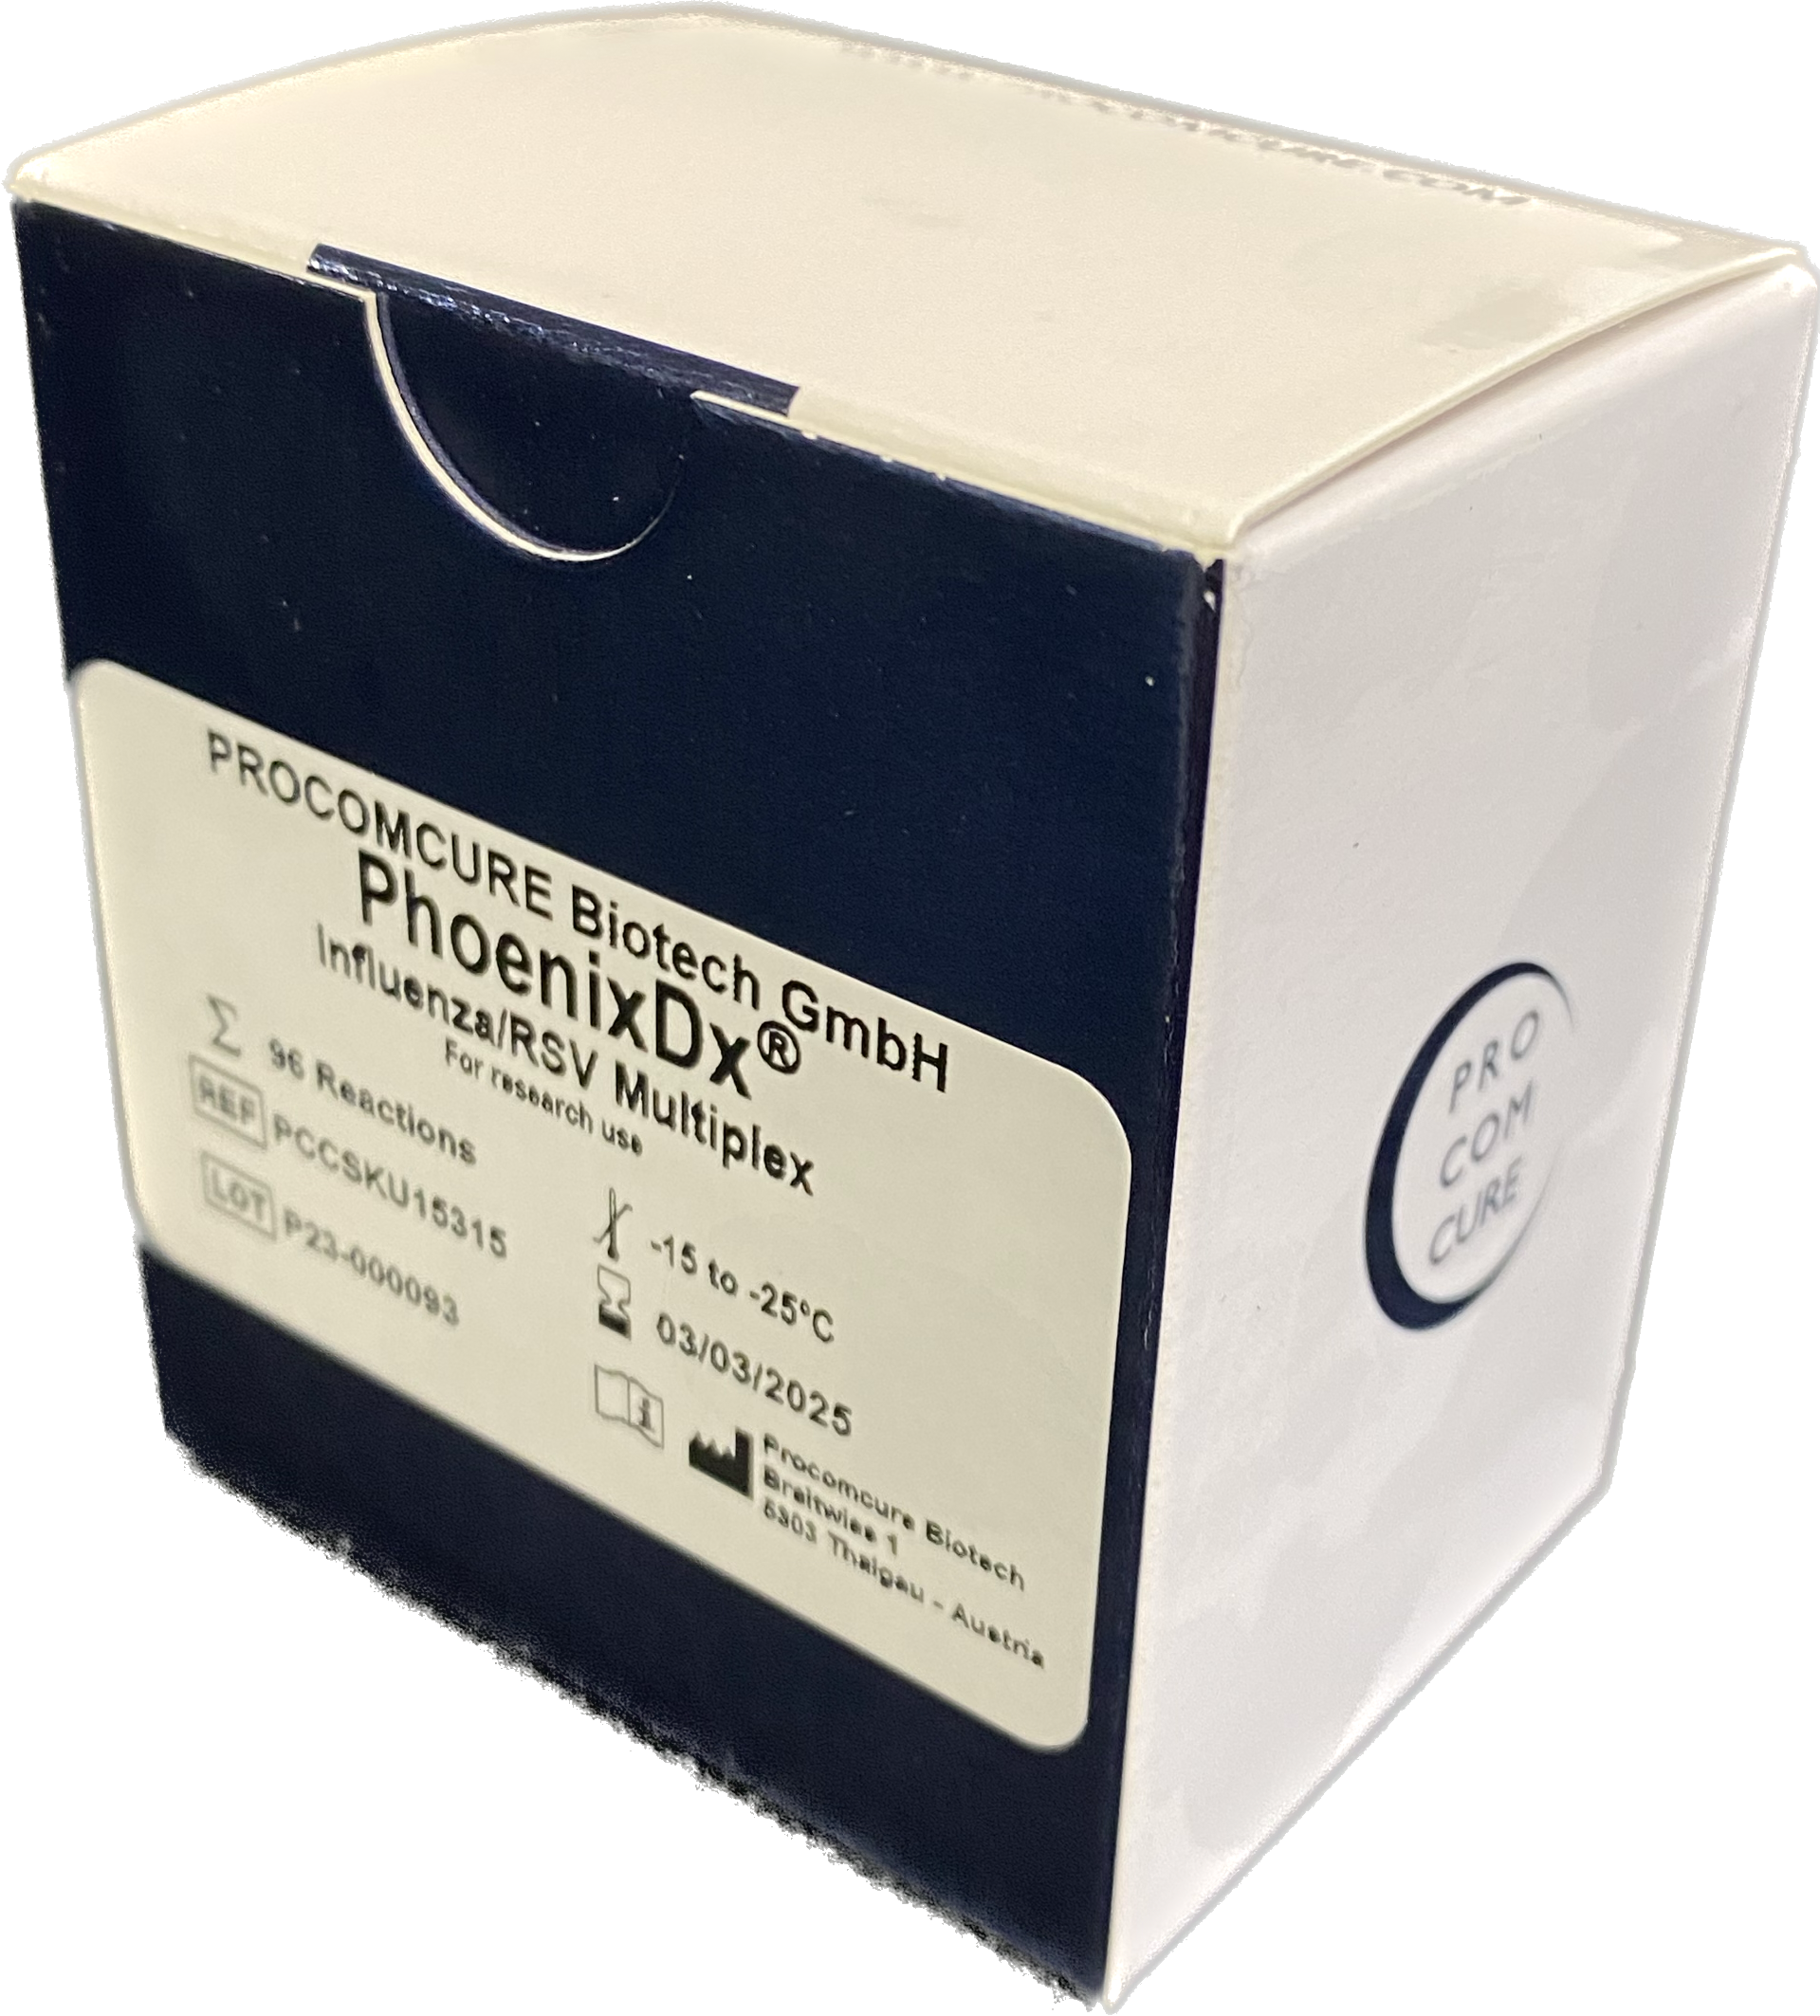 PhoenixDx® Influenza/RSV Multiplex (96 Tests Per Kit) (RUO)